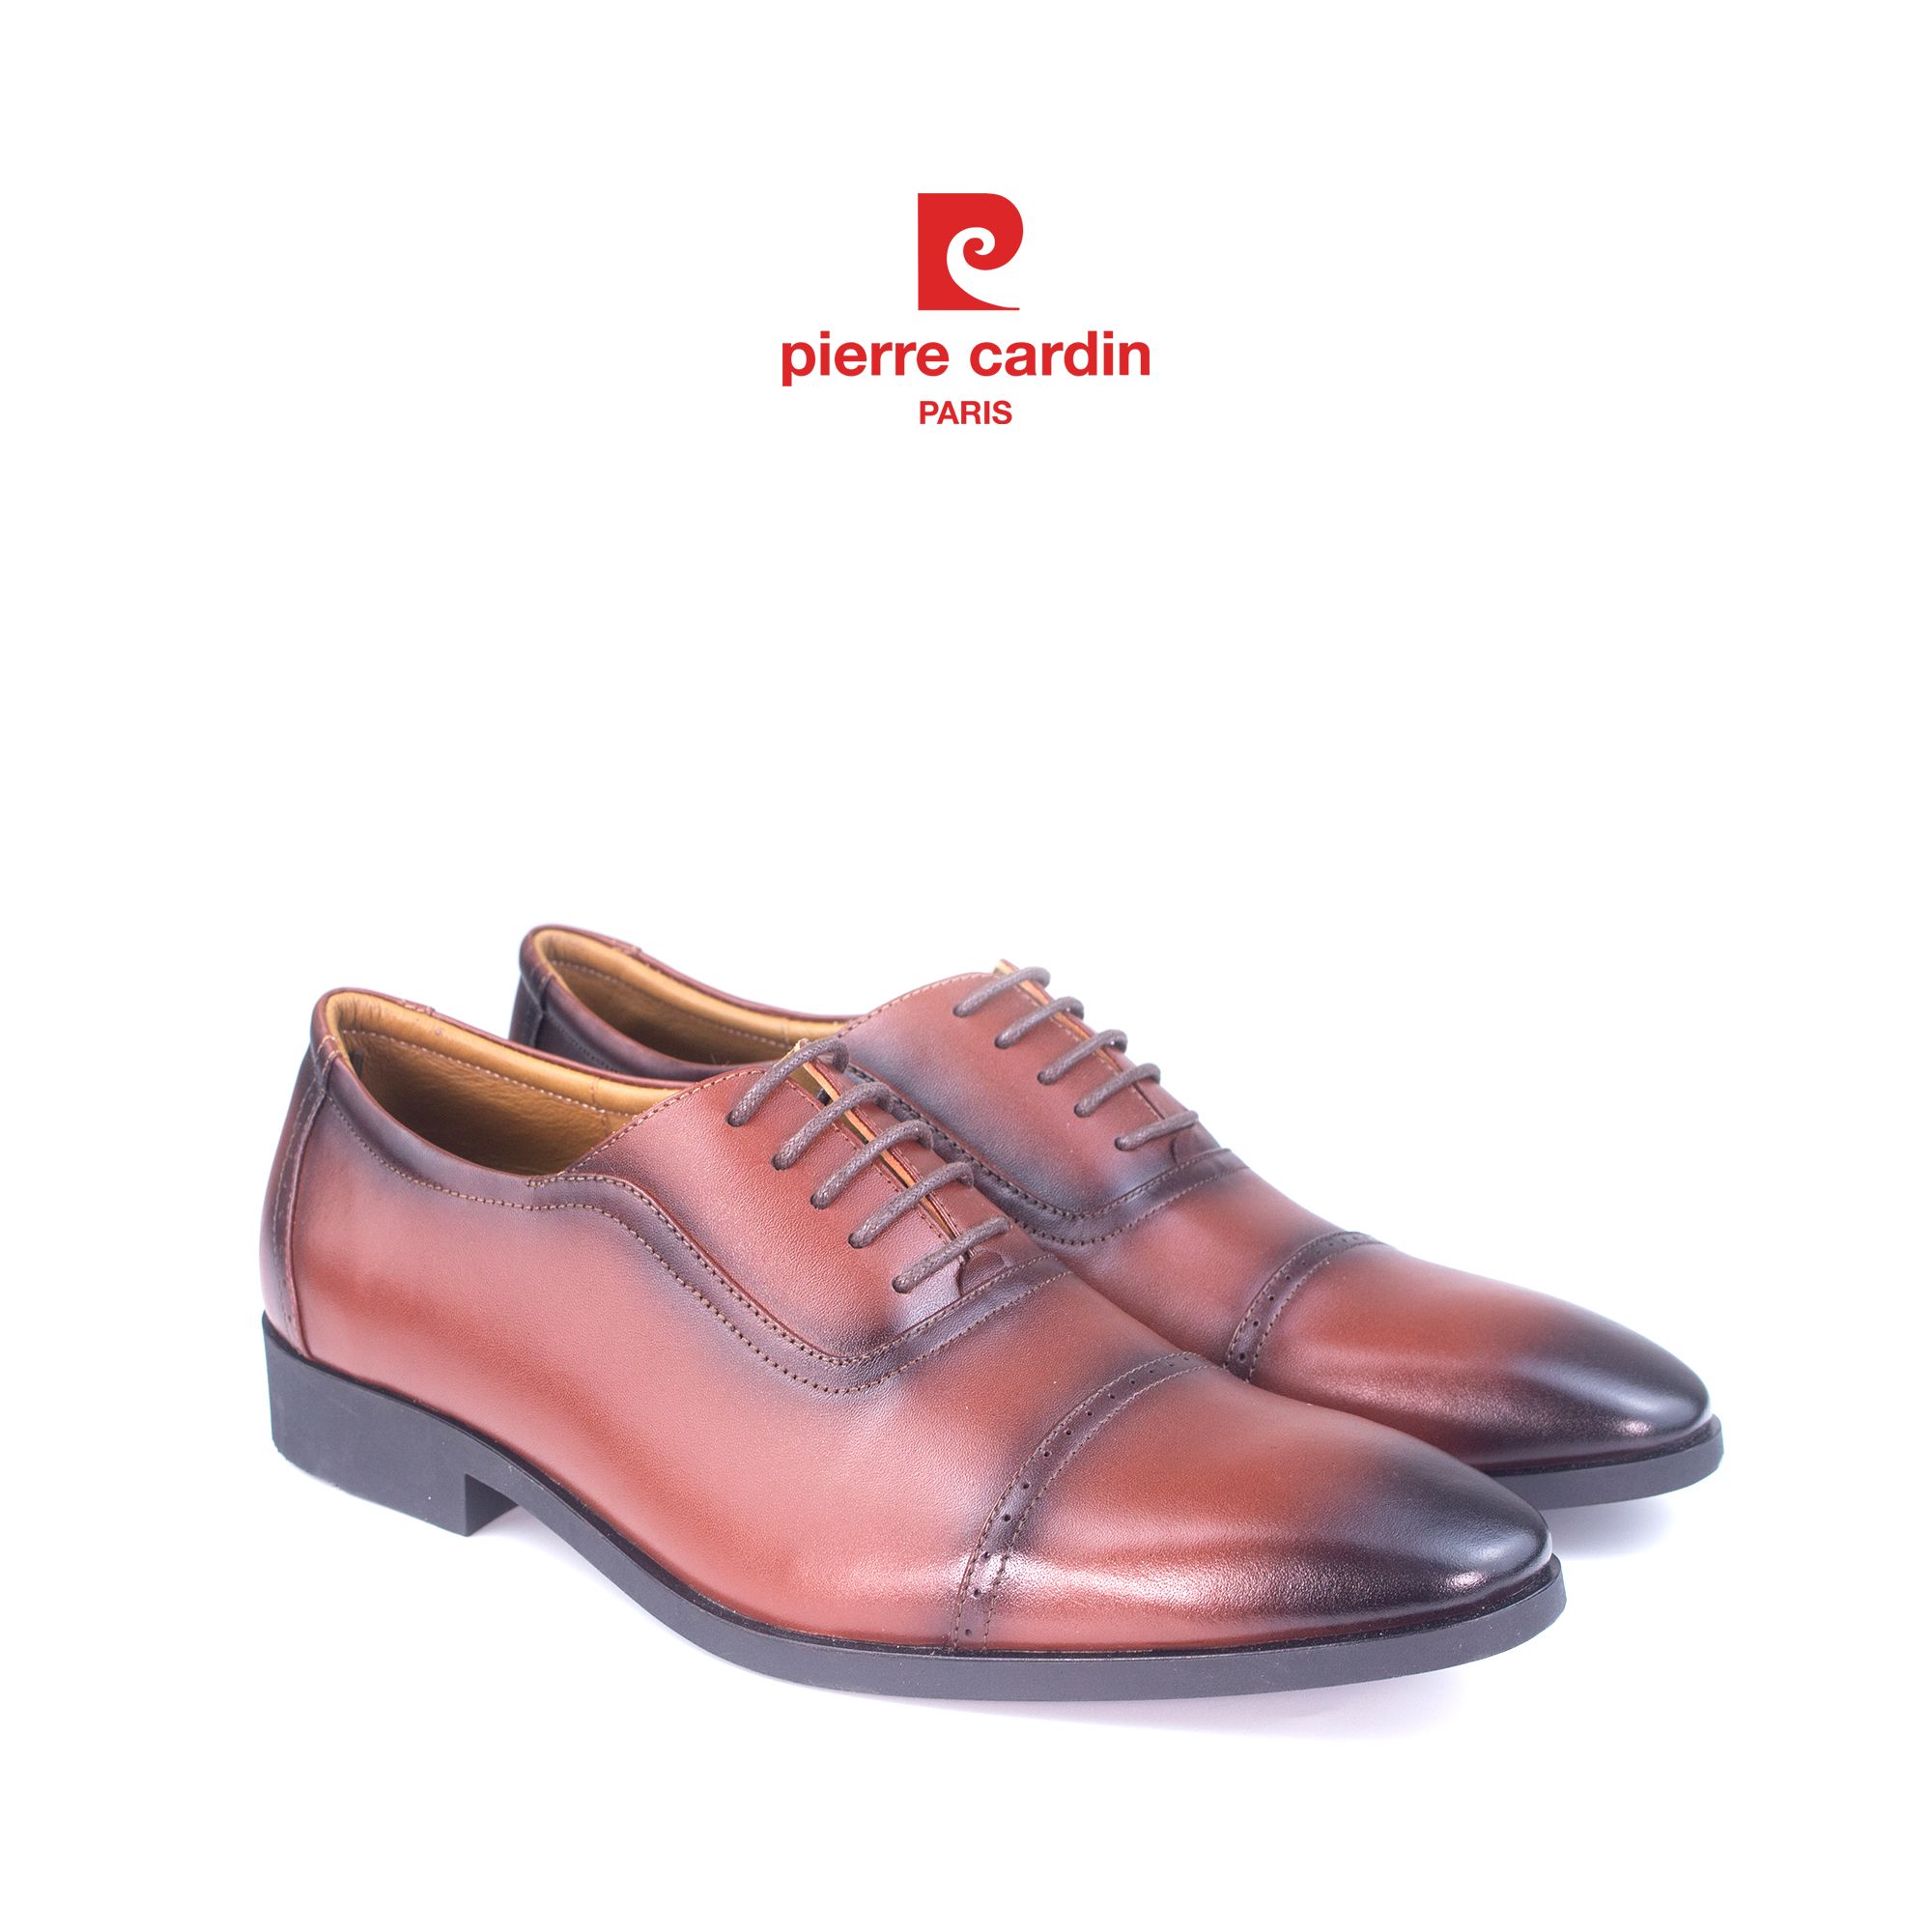 Giày Oxford Pierre Cardin #715 brown